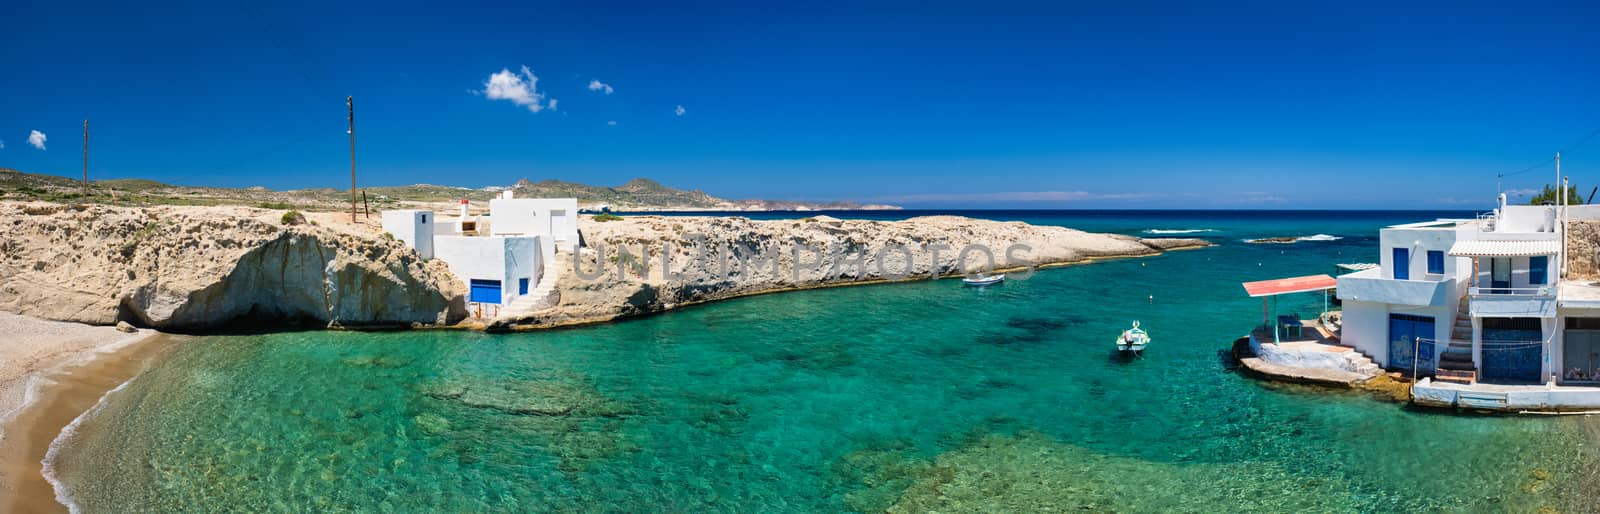 Crystal clear blue water at MItakas village beach, Milos island, Greece. by dimol